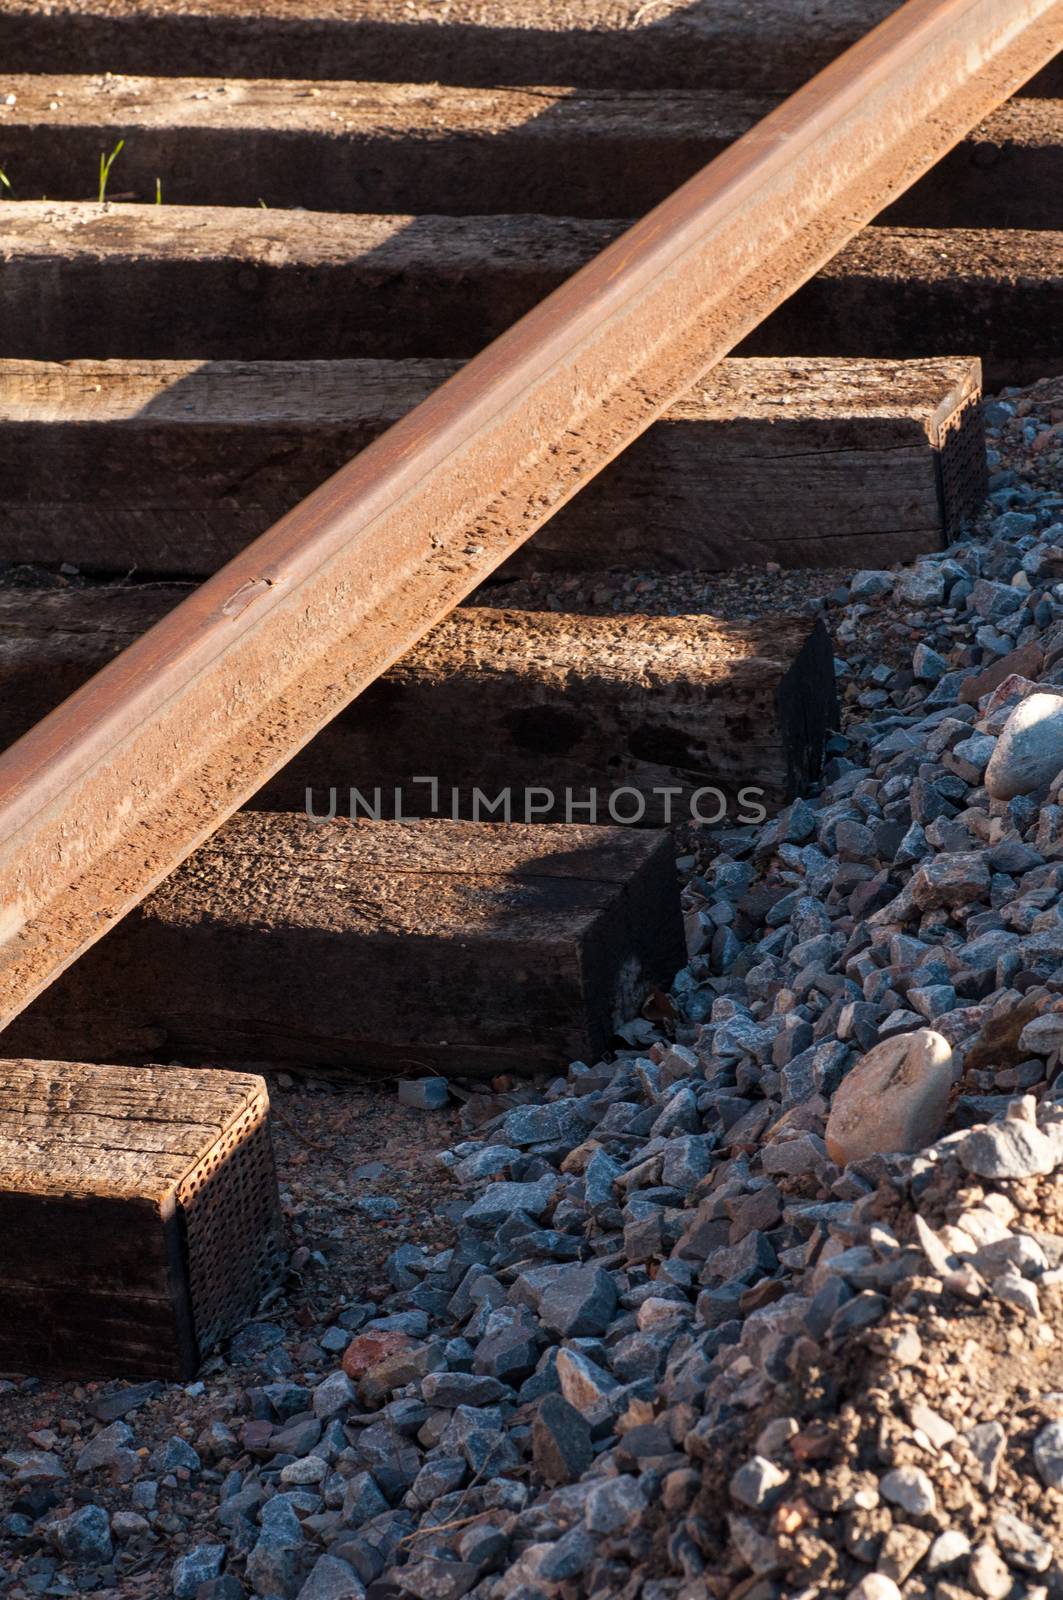 Train Tracks near the industrial areas of Salt Lake City